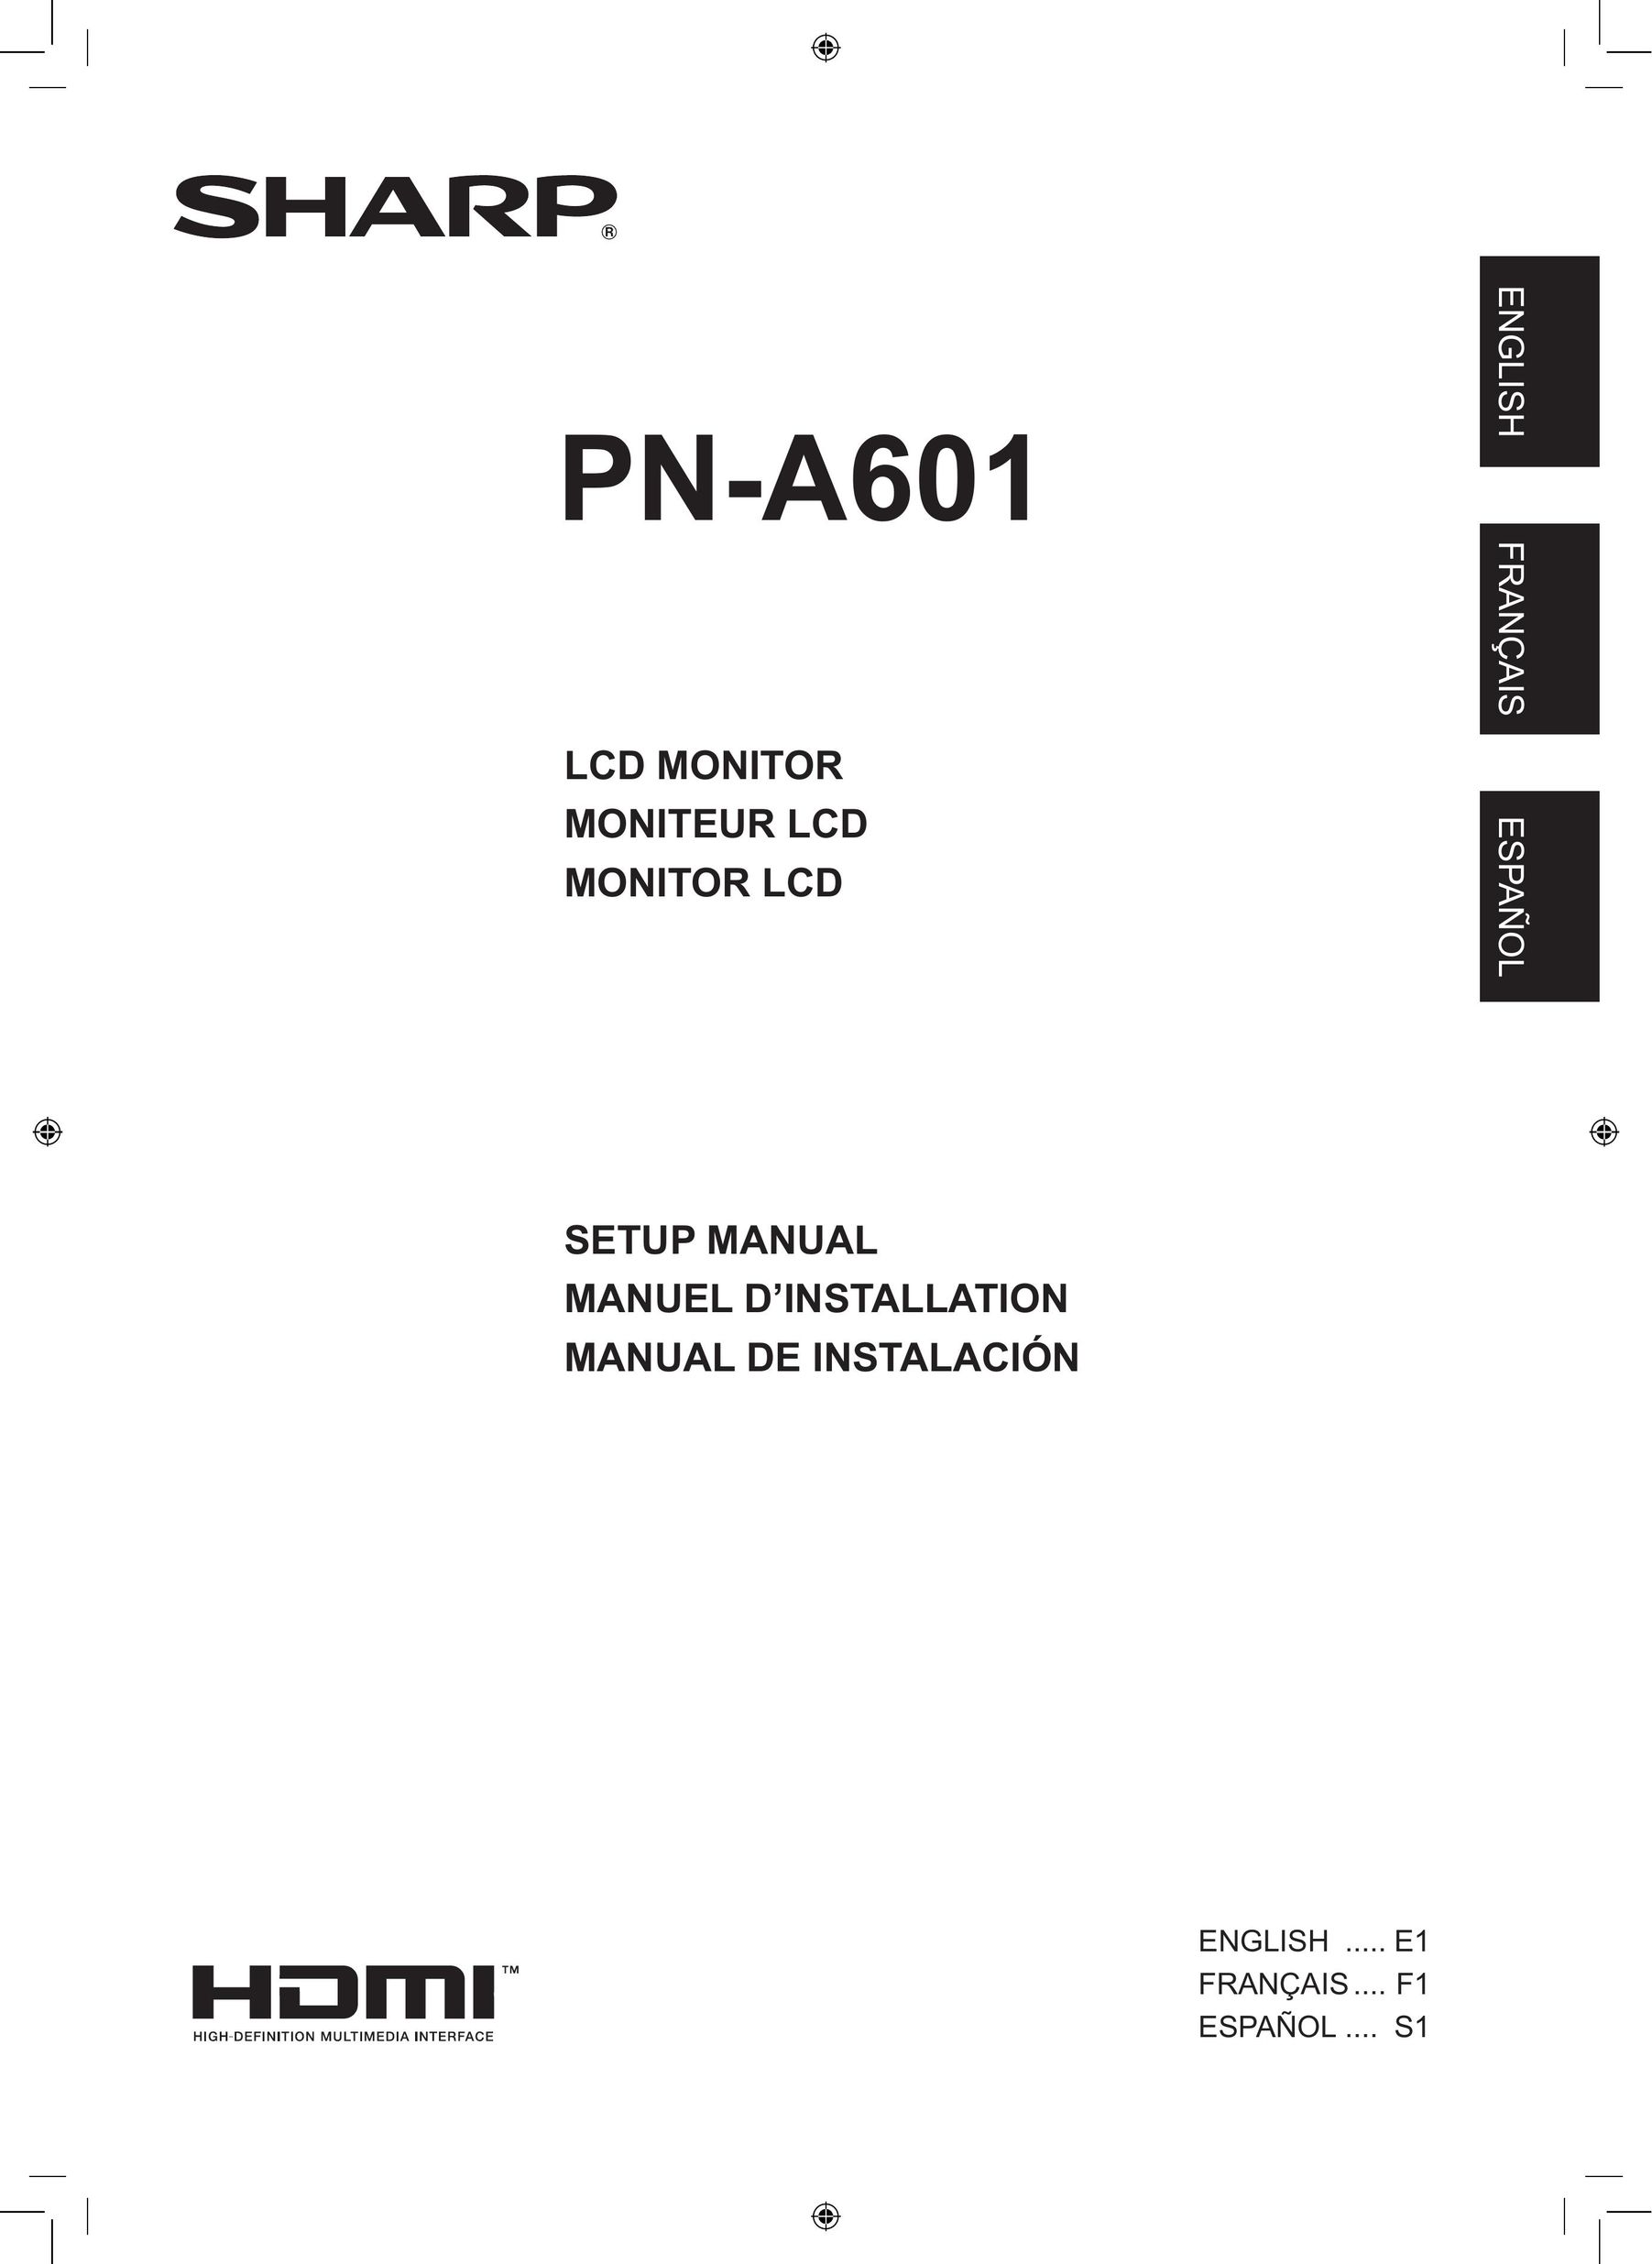 Sharp PN-A601 Computer Monitor User Manual